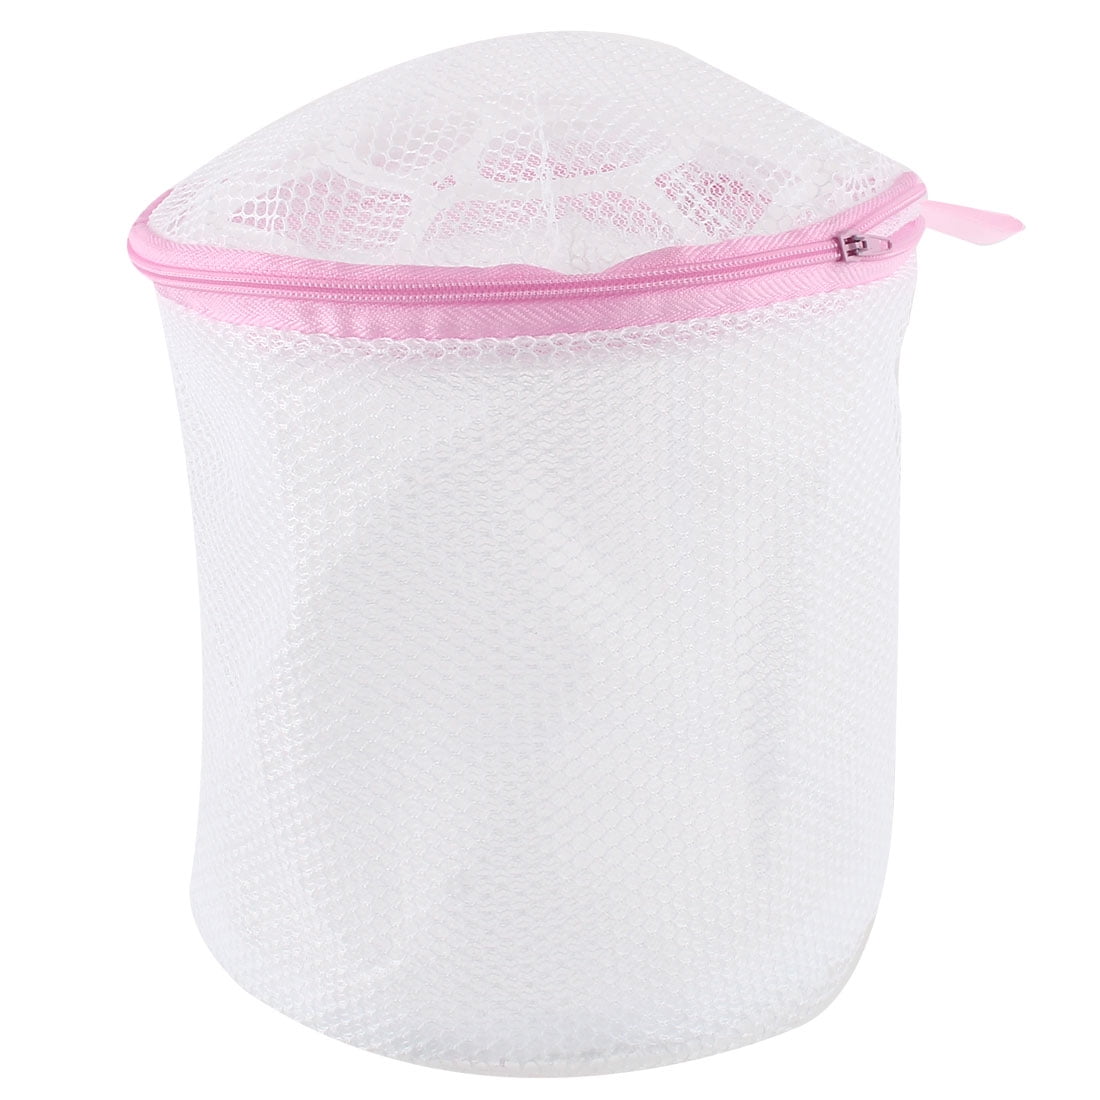 Underwear Aid Bra Laundry Bag Mesh Wash Basket Net Washing Storage Zipper Bag US 